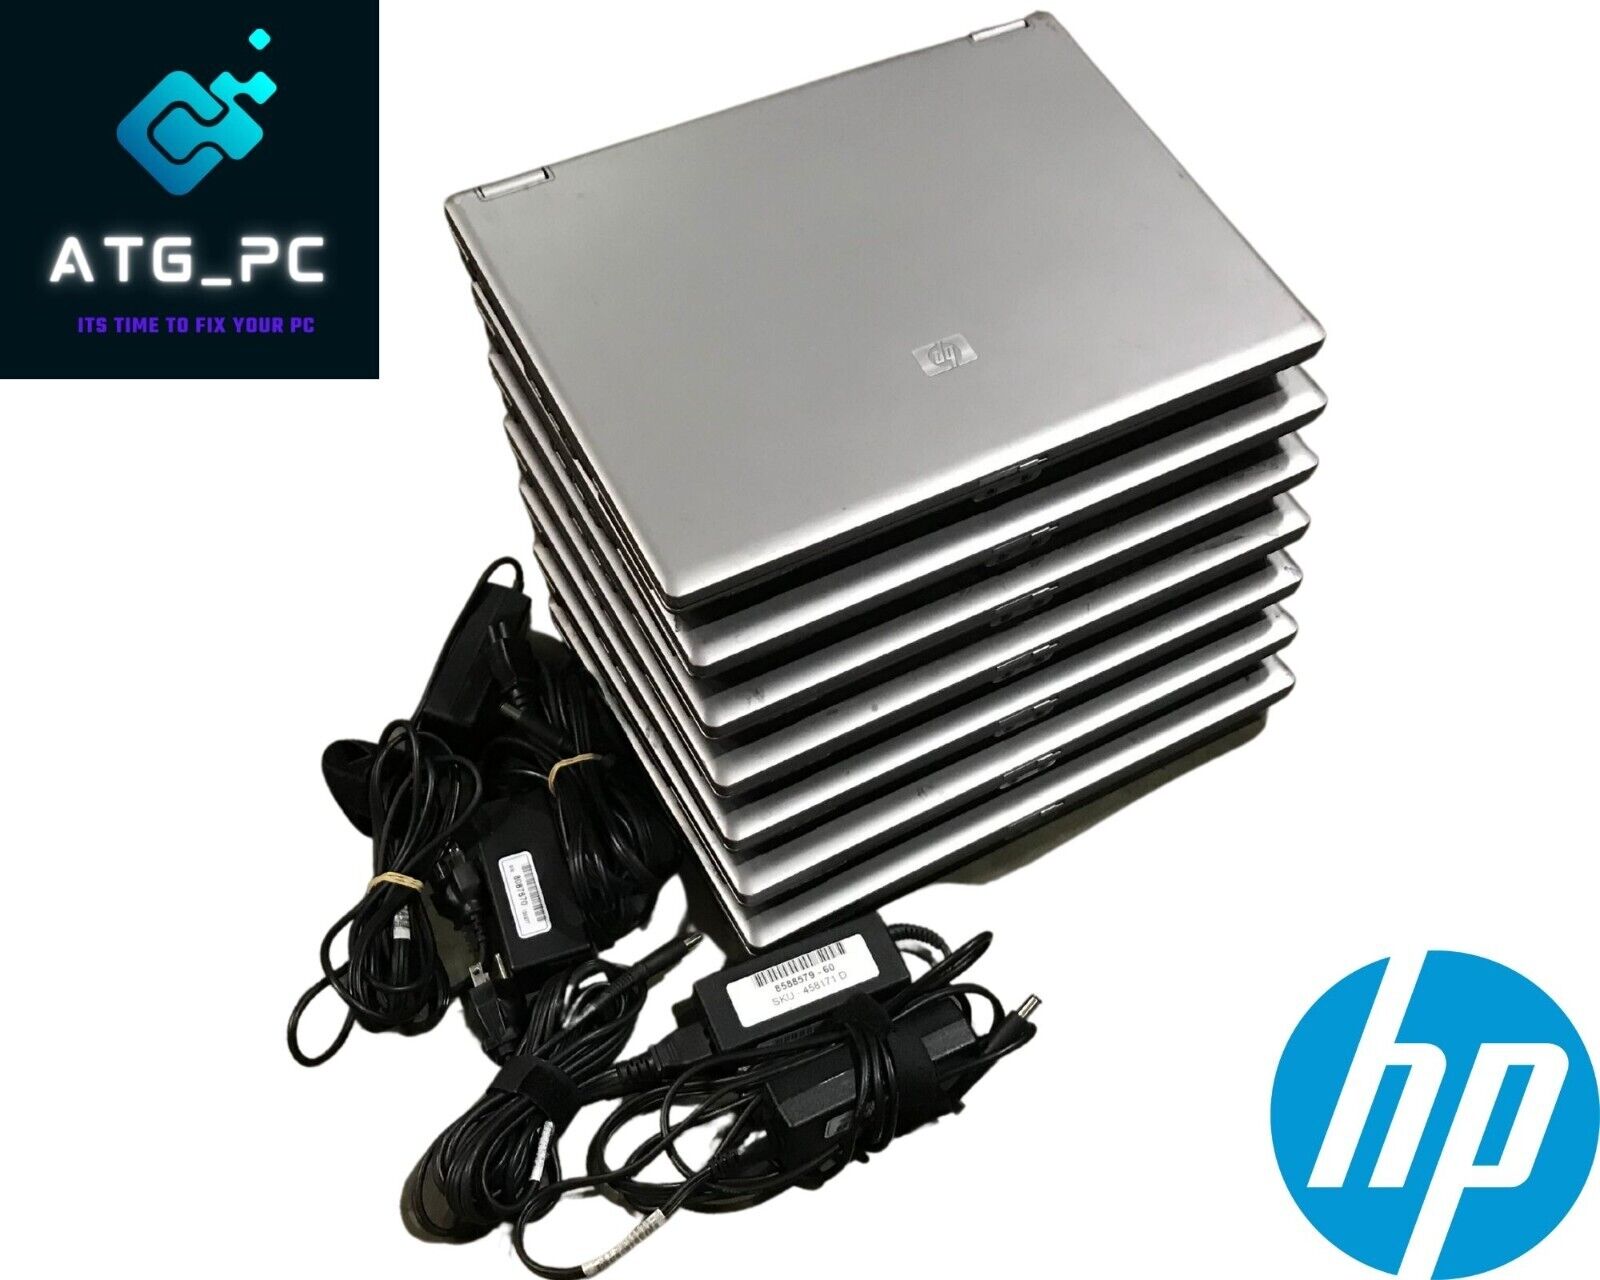 HP Compaq 6530B Intel Core2Duo P8600 2.40GHz 2GB [w/Batteries No HDD] [LOT OF 7]